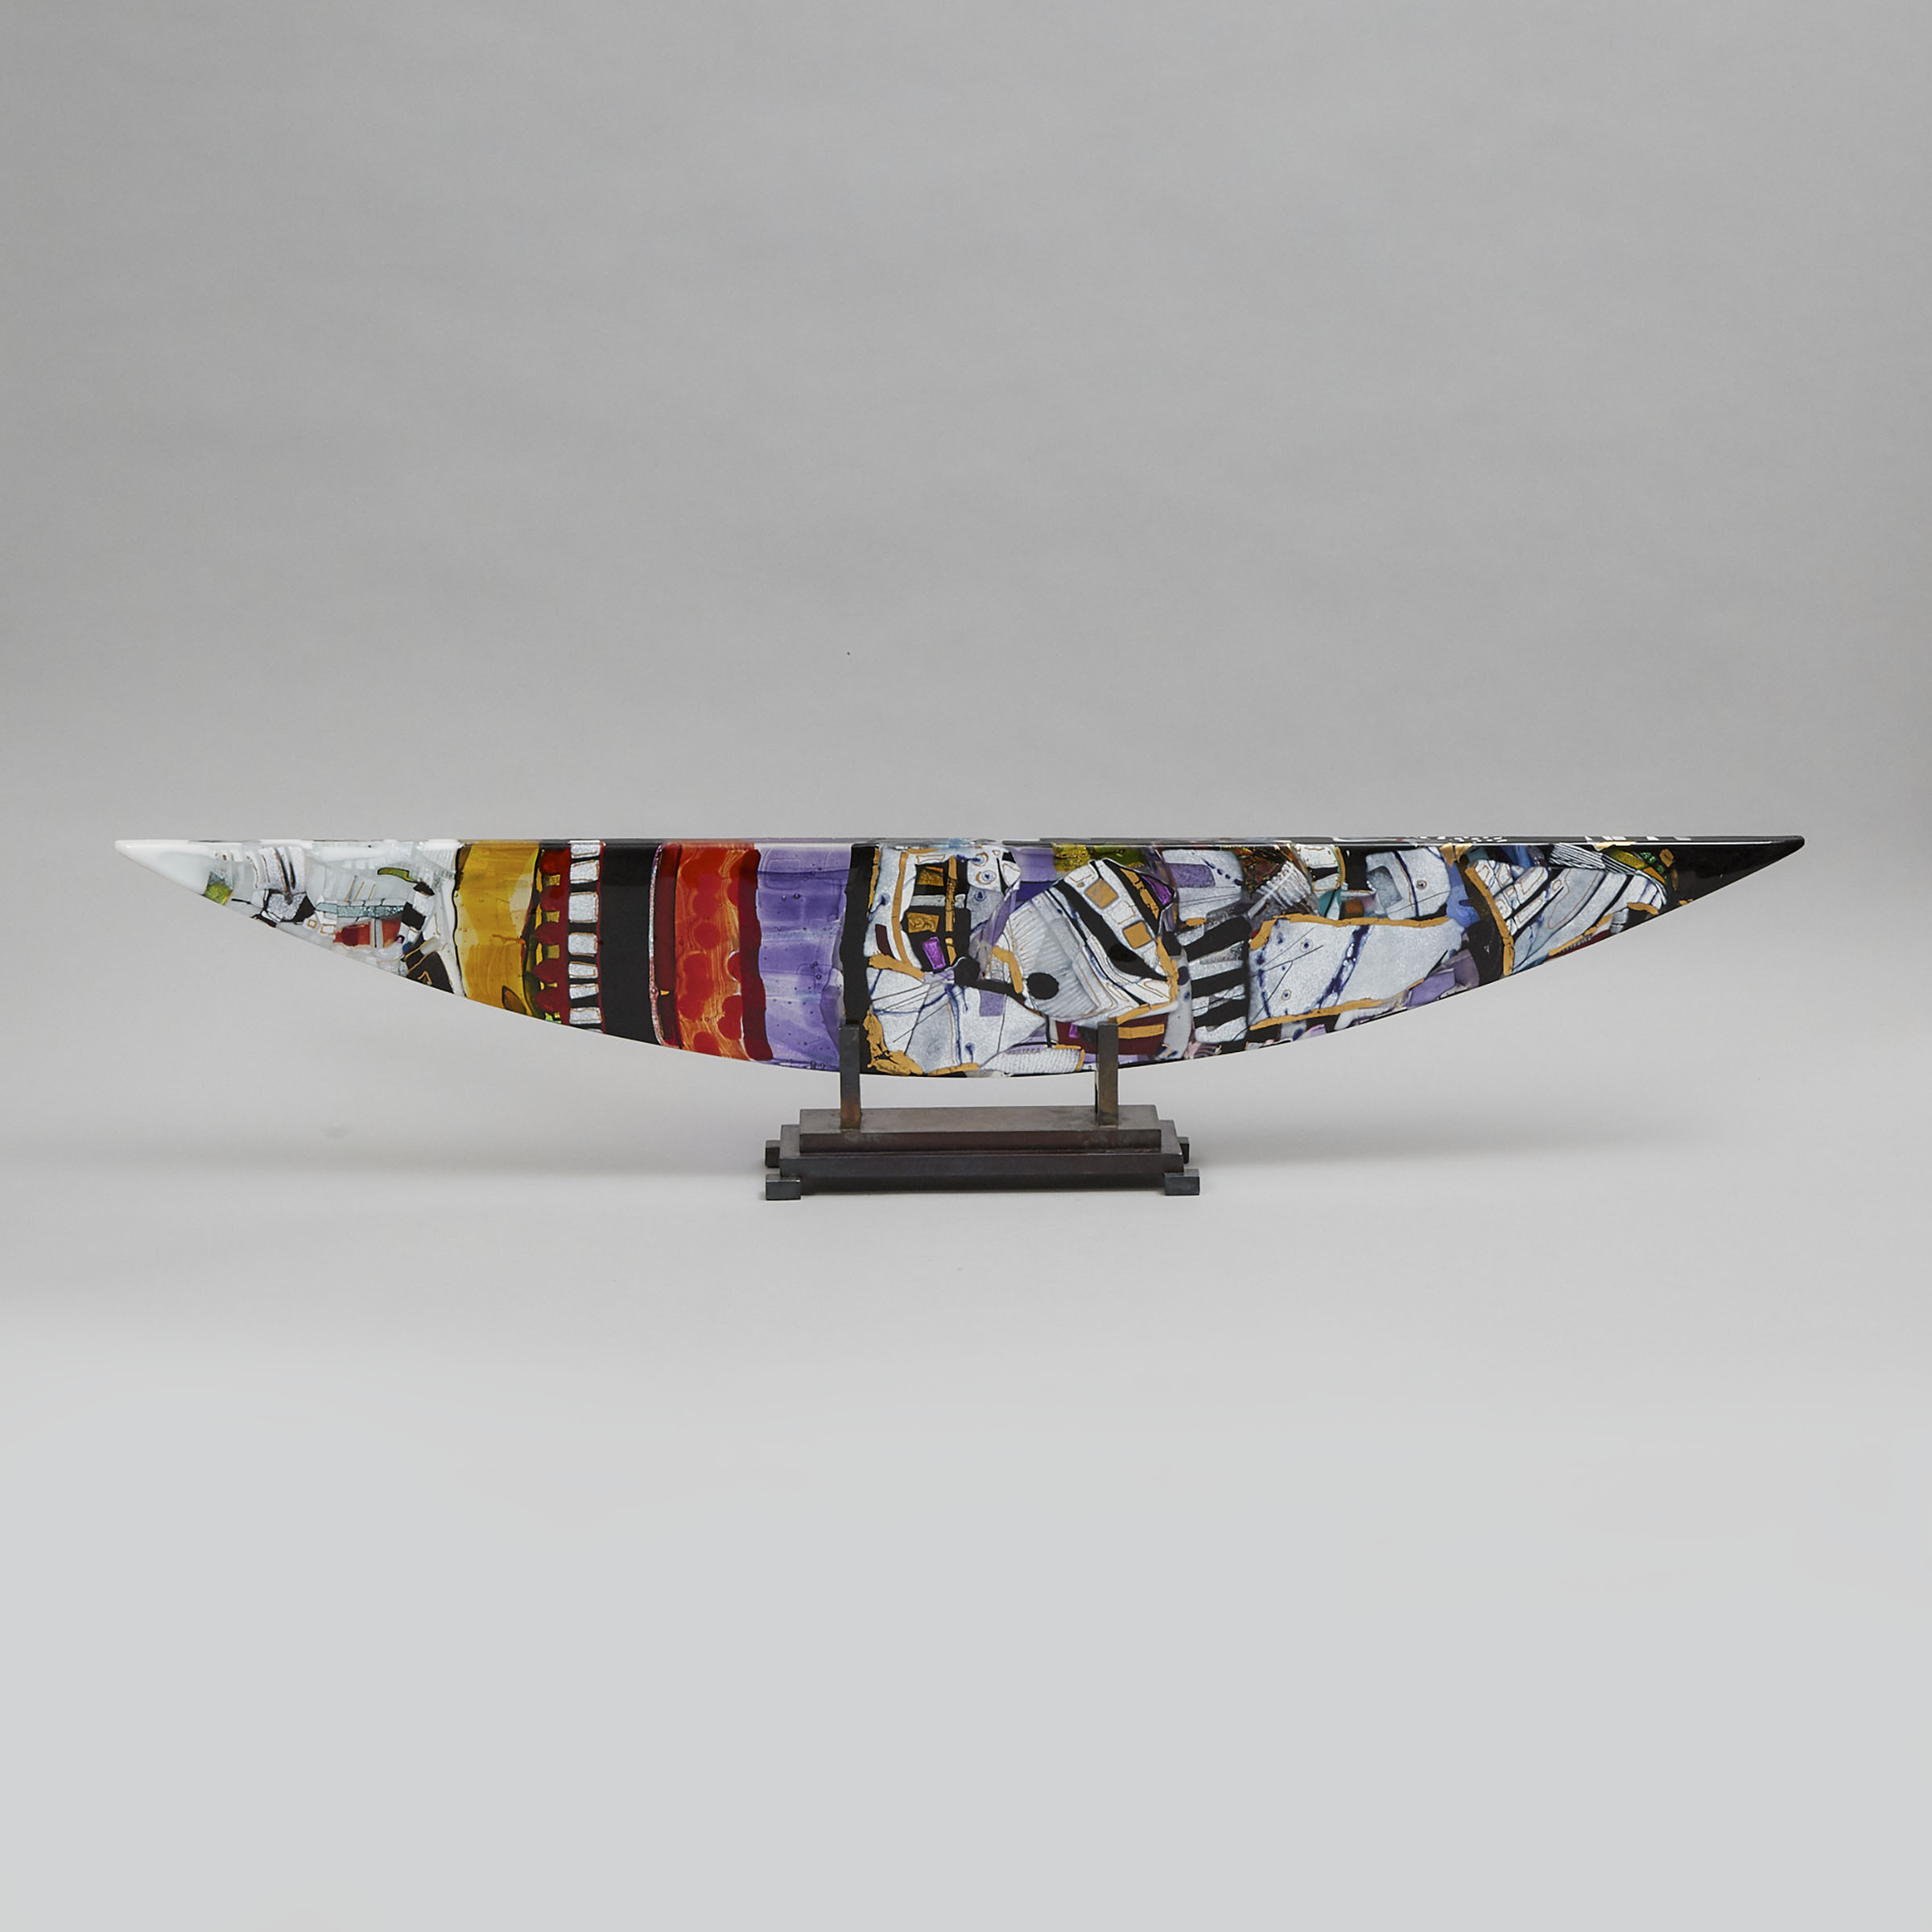 Robert Buick (Canadian, b.1964), Coloured Glass and Metal Sculpture, 2019